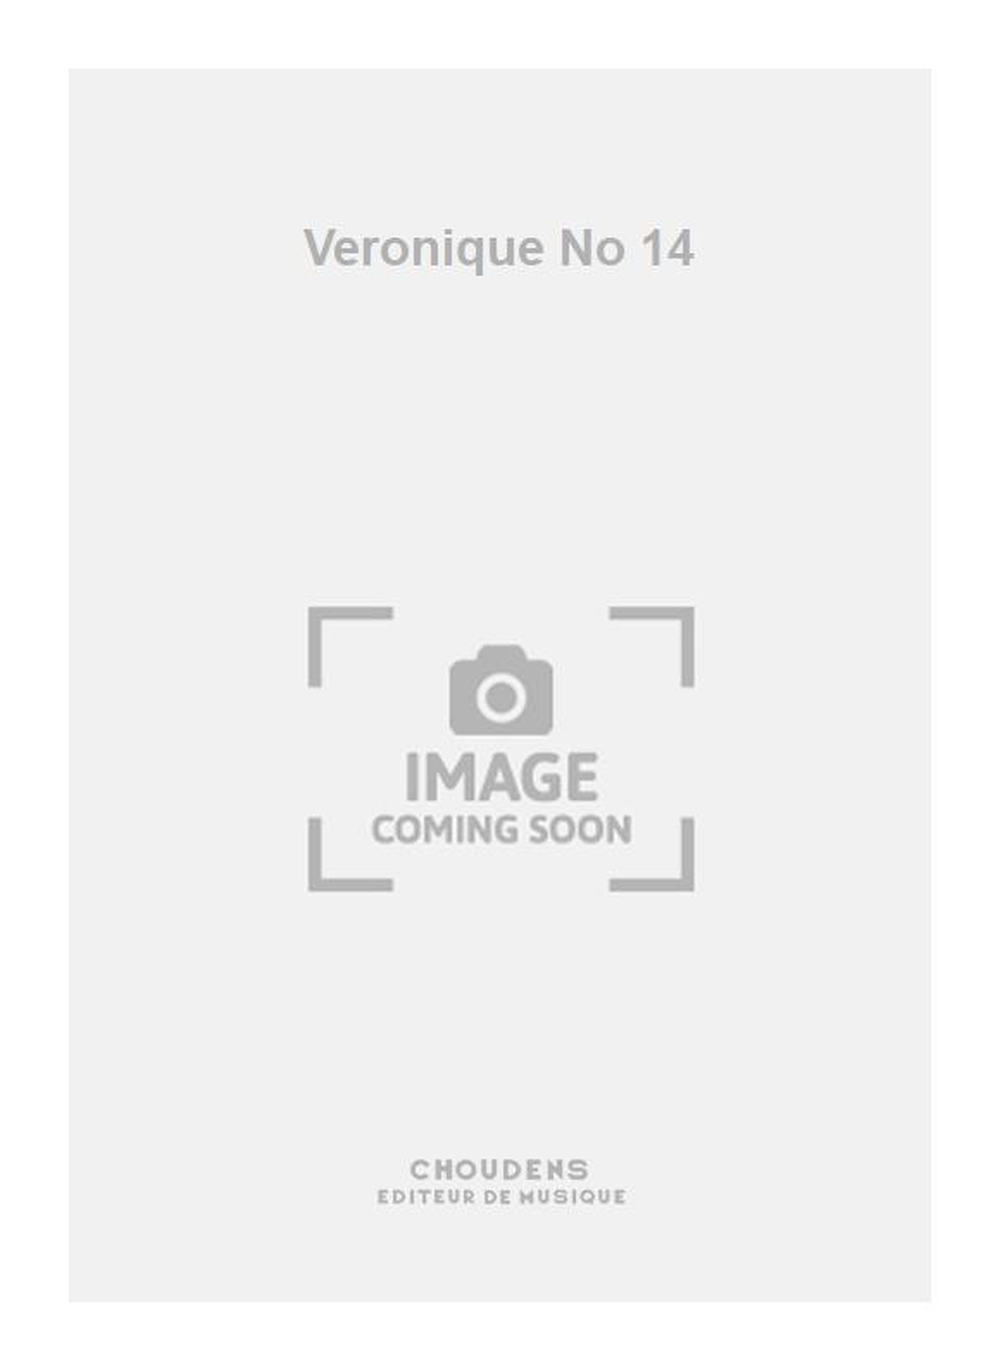 Messager: Veronique No 14